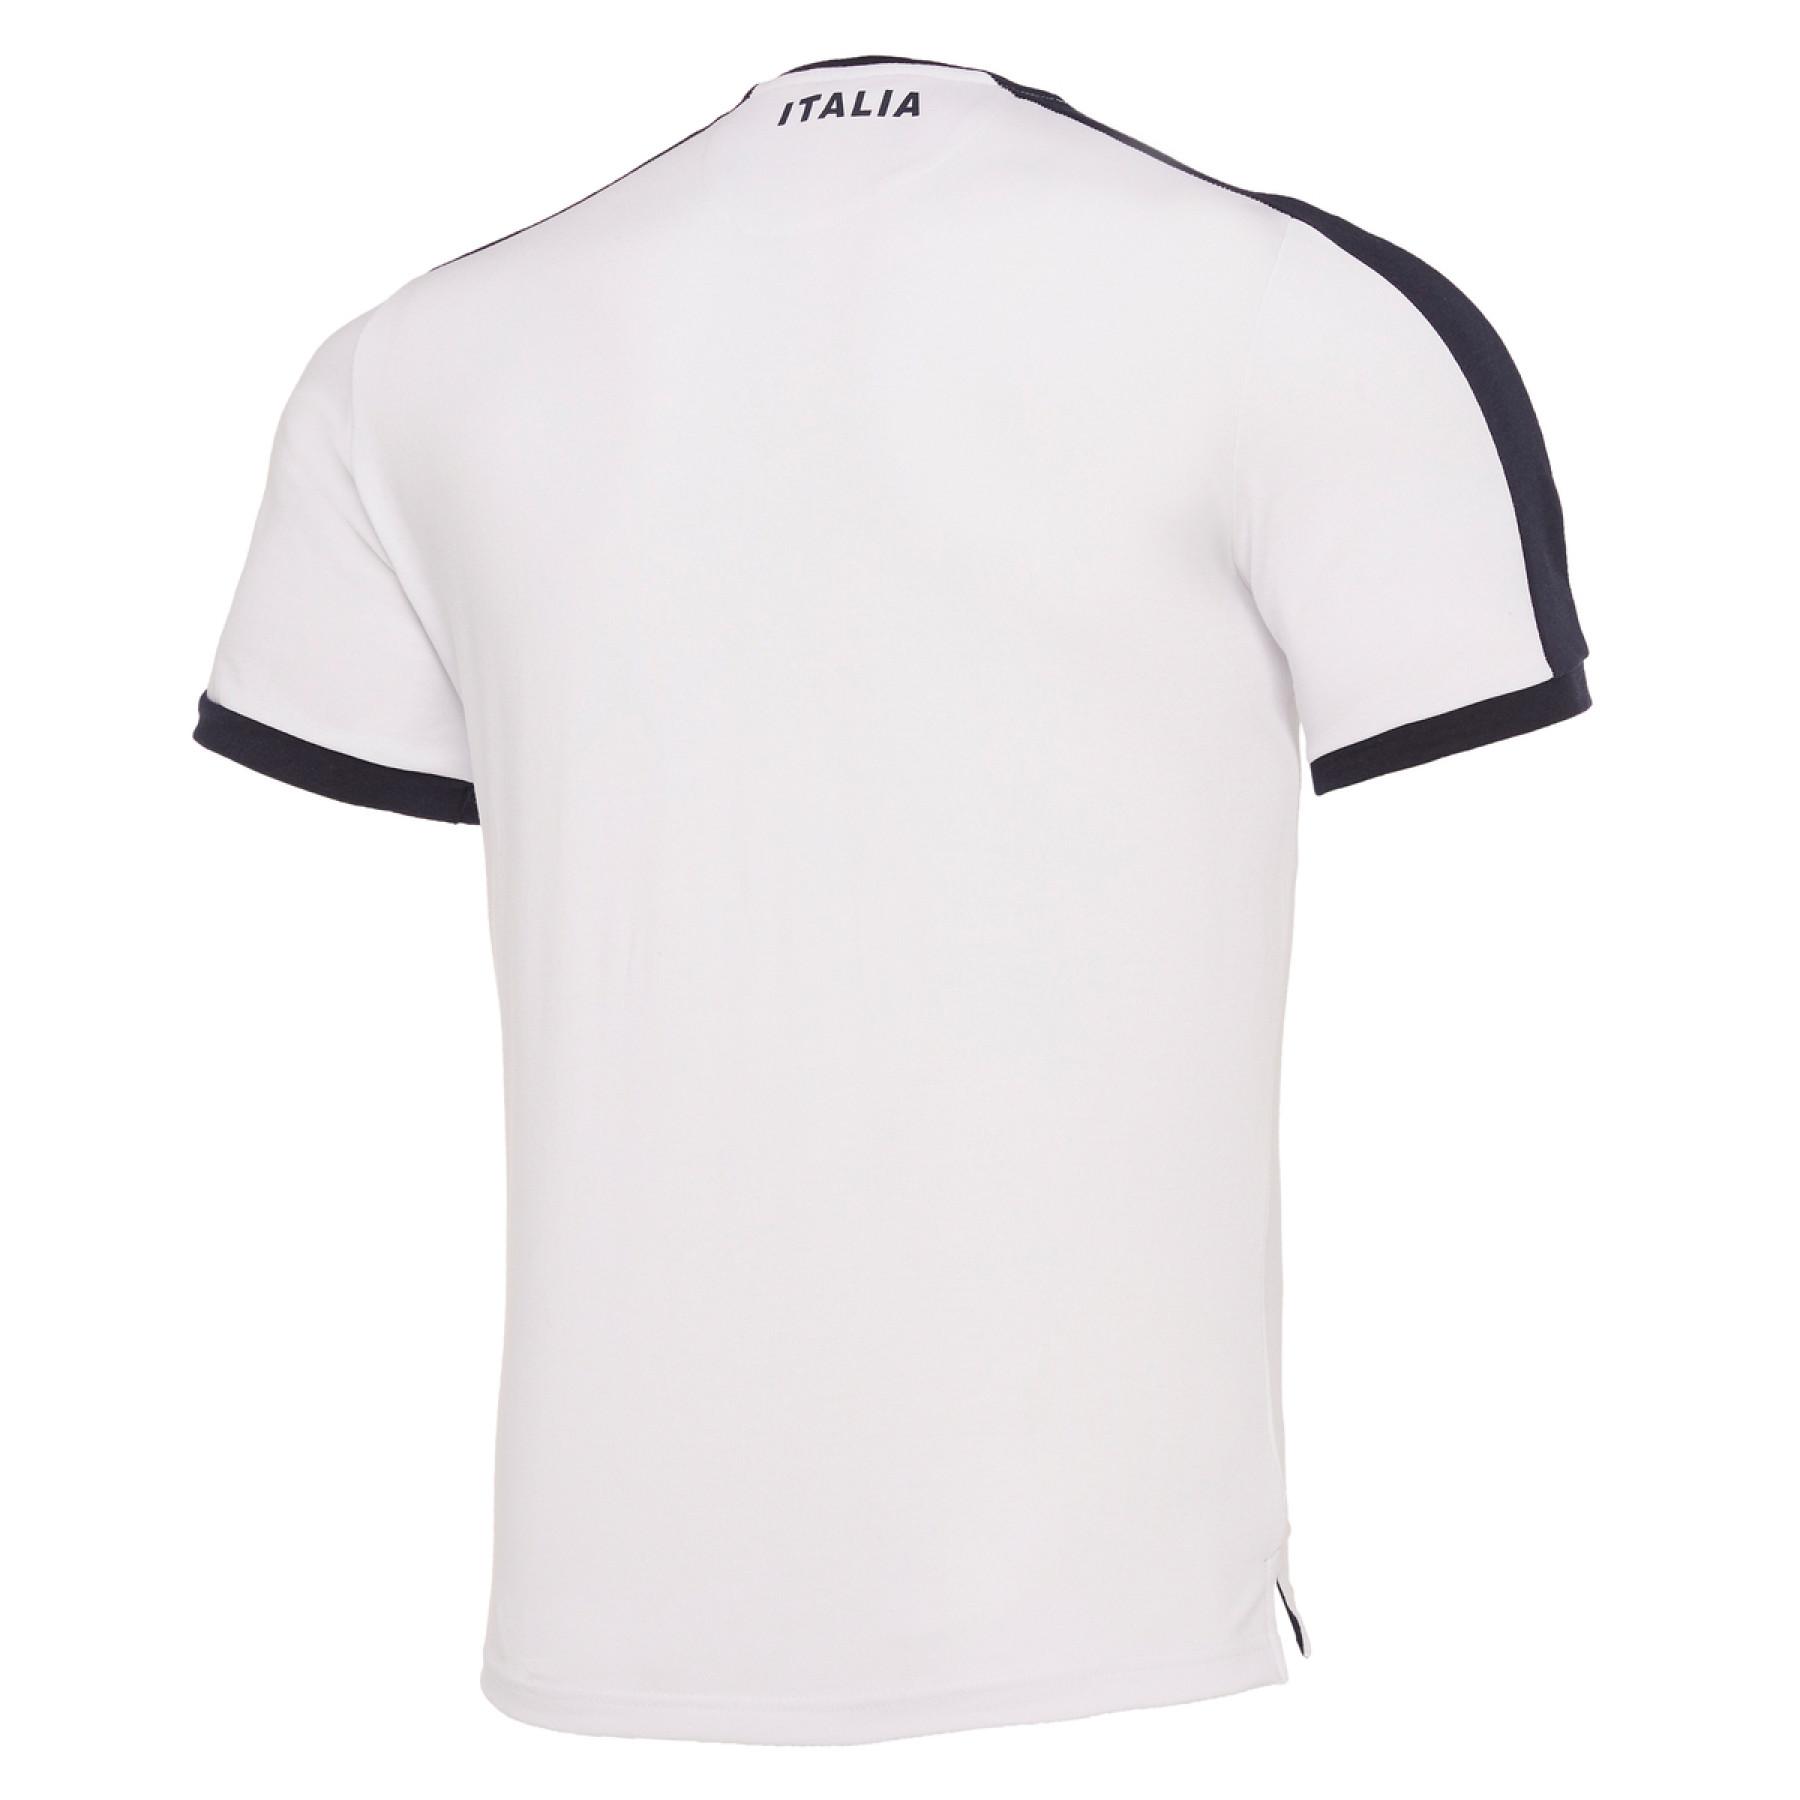 T-shirt en algodão Italie rugby 2019